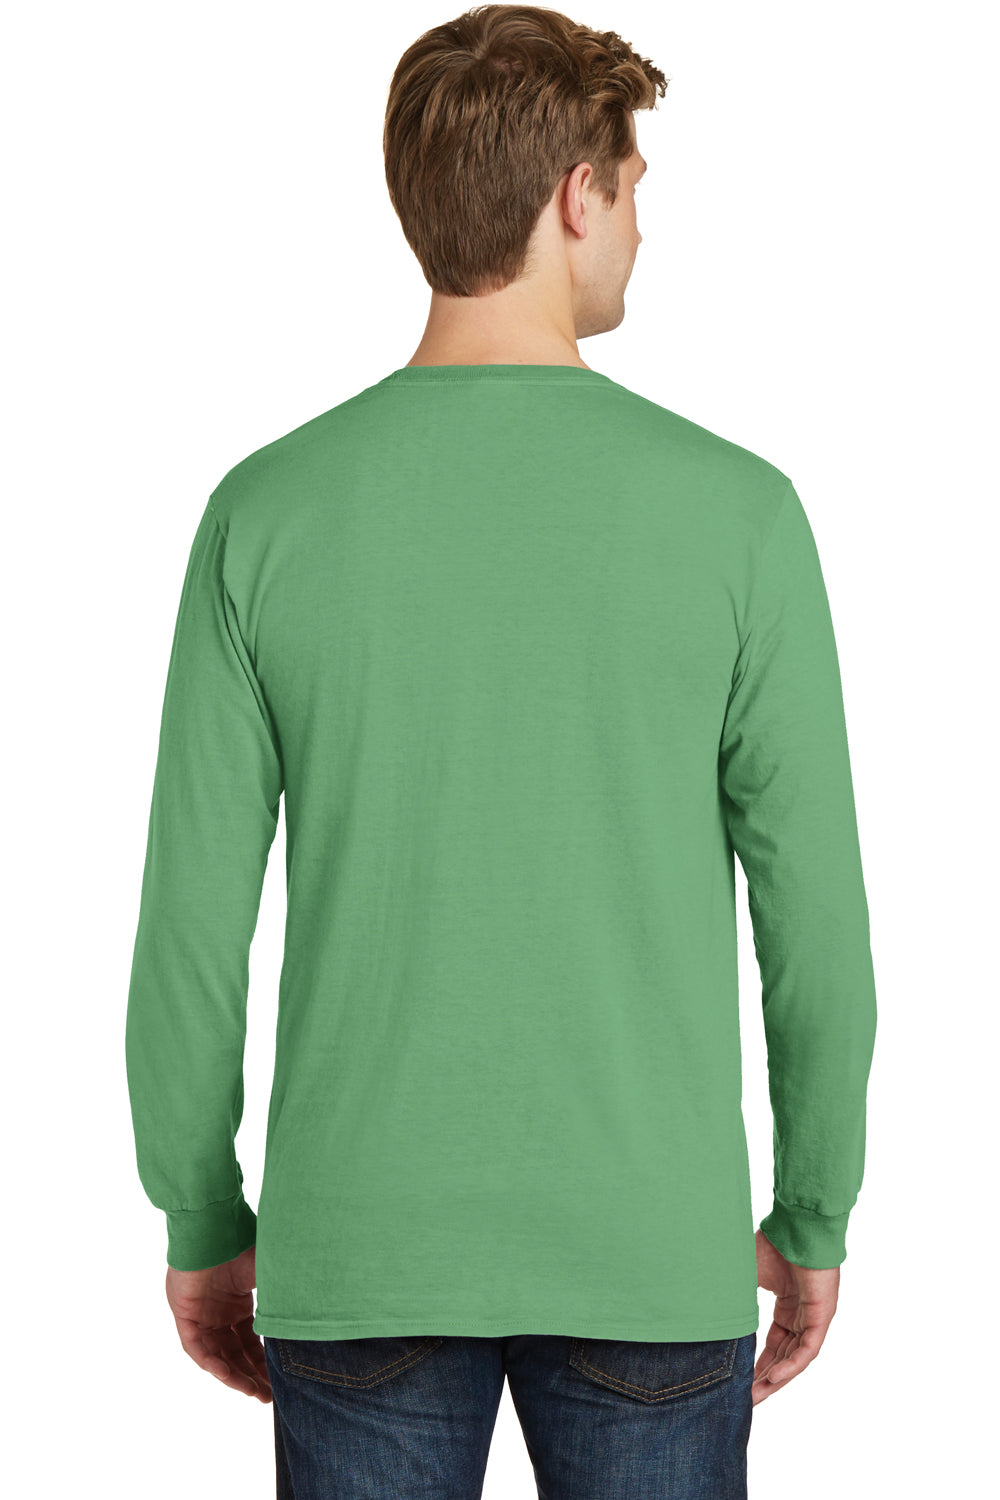 Port & Company PC099LSP Mens Beach Wash Long Sleeve Crewneck T-Shirt w/ Pocket Safari Green Back